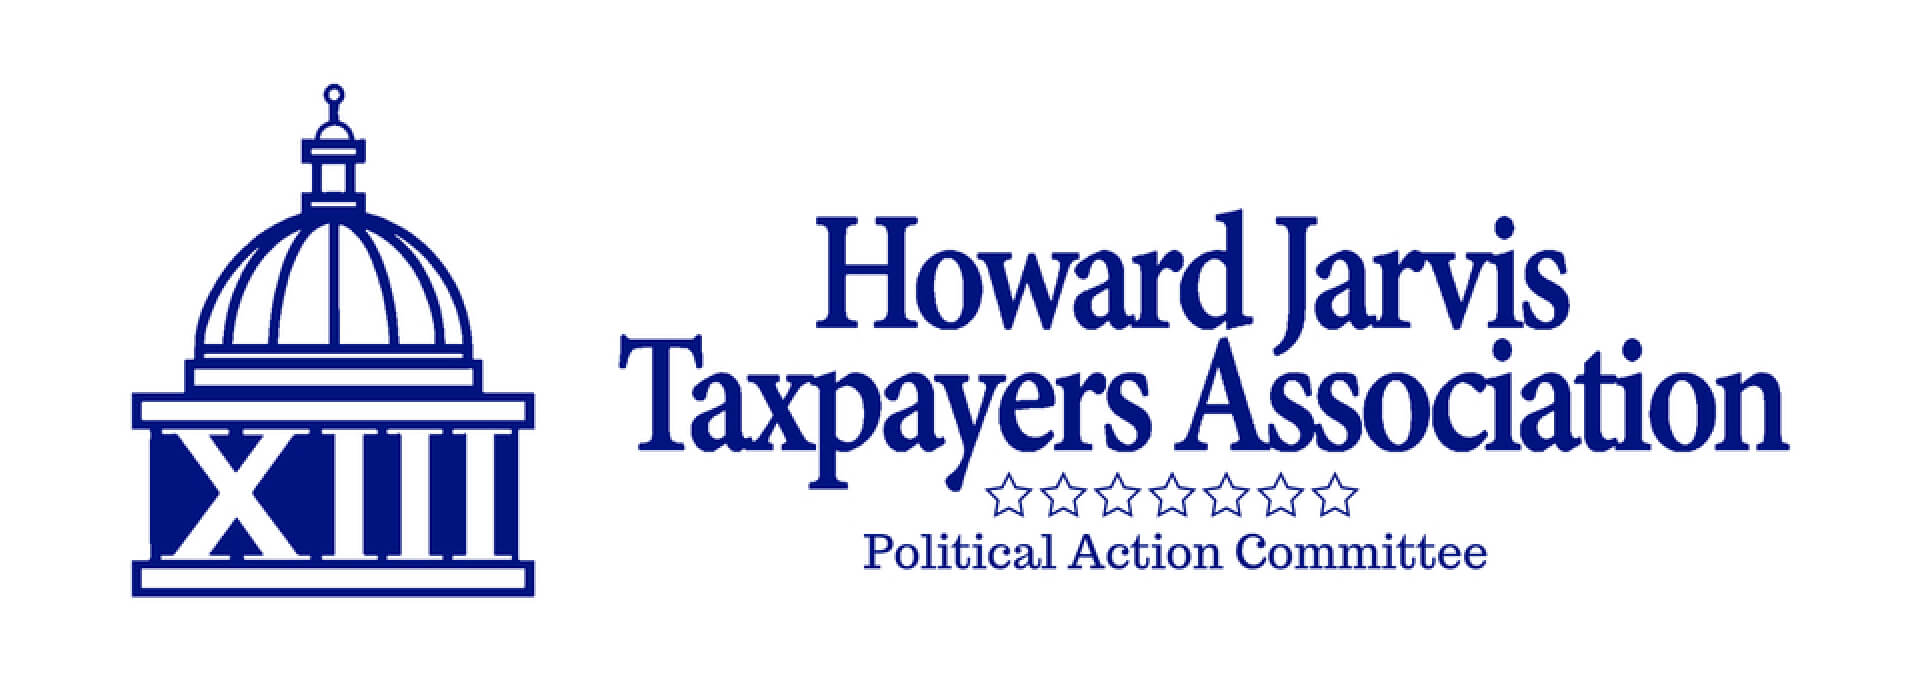 Howard-jarvis-taxpayers